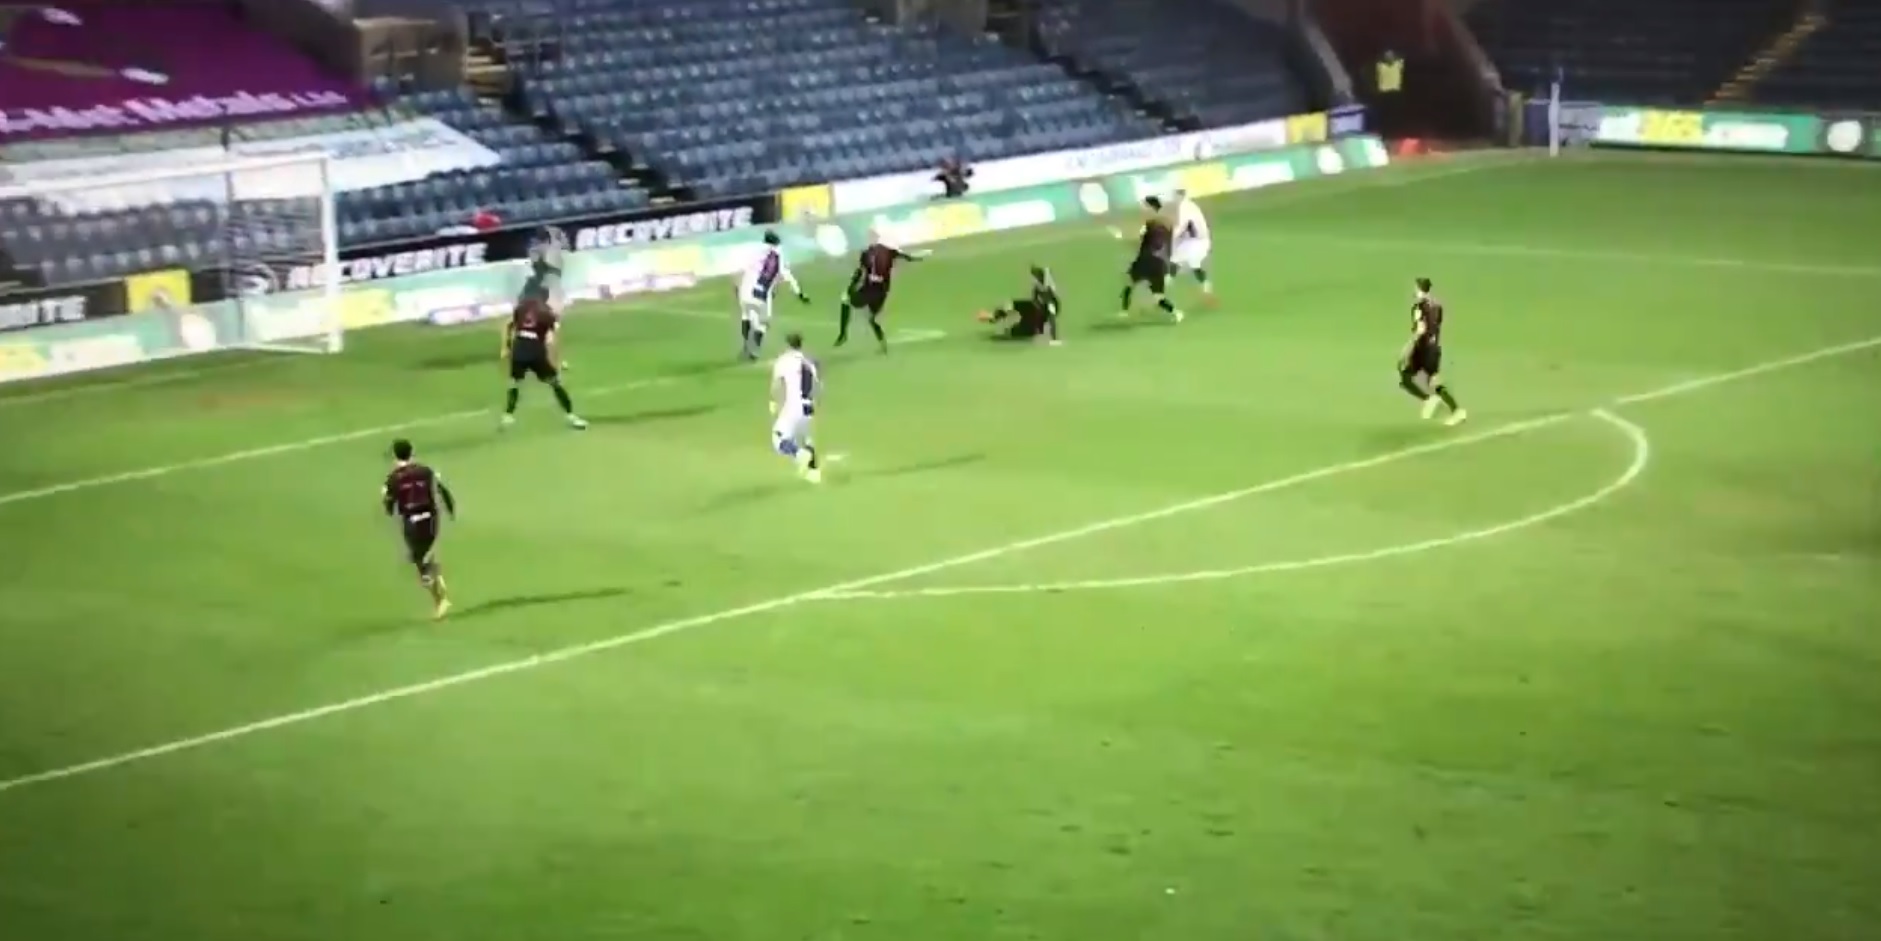 (Video) LFC loanee Harvey Elliott nets brilliant fifth goal of the season from challenging angle